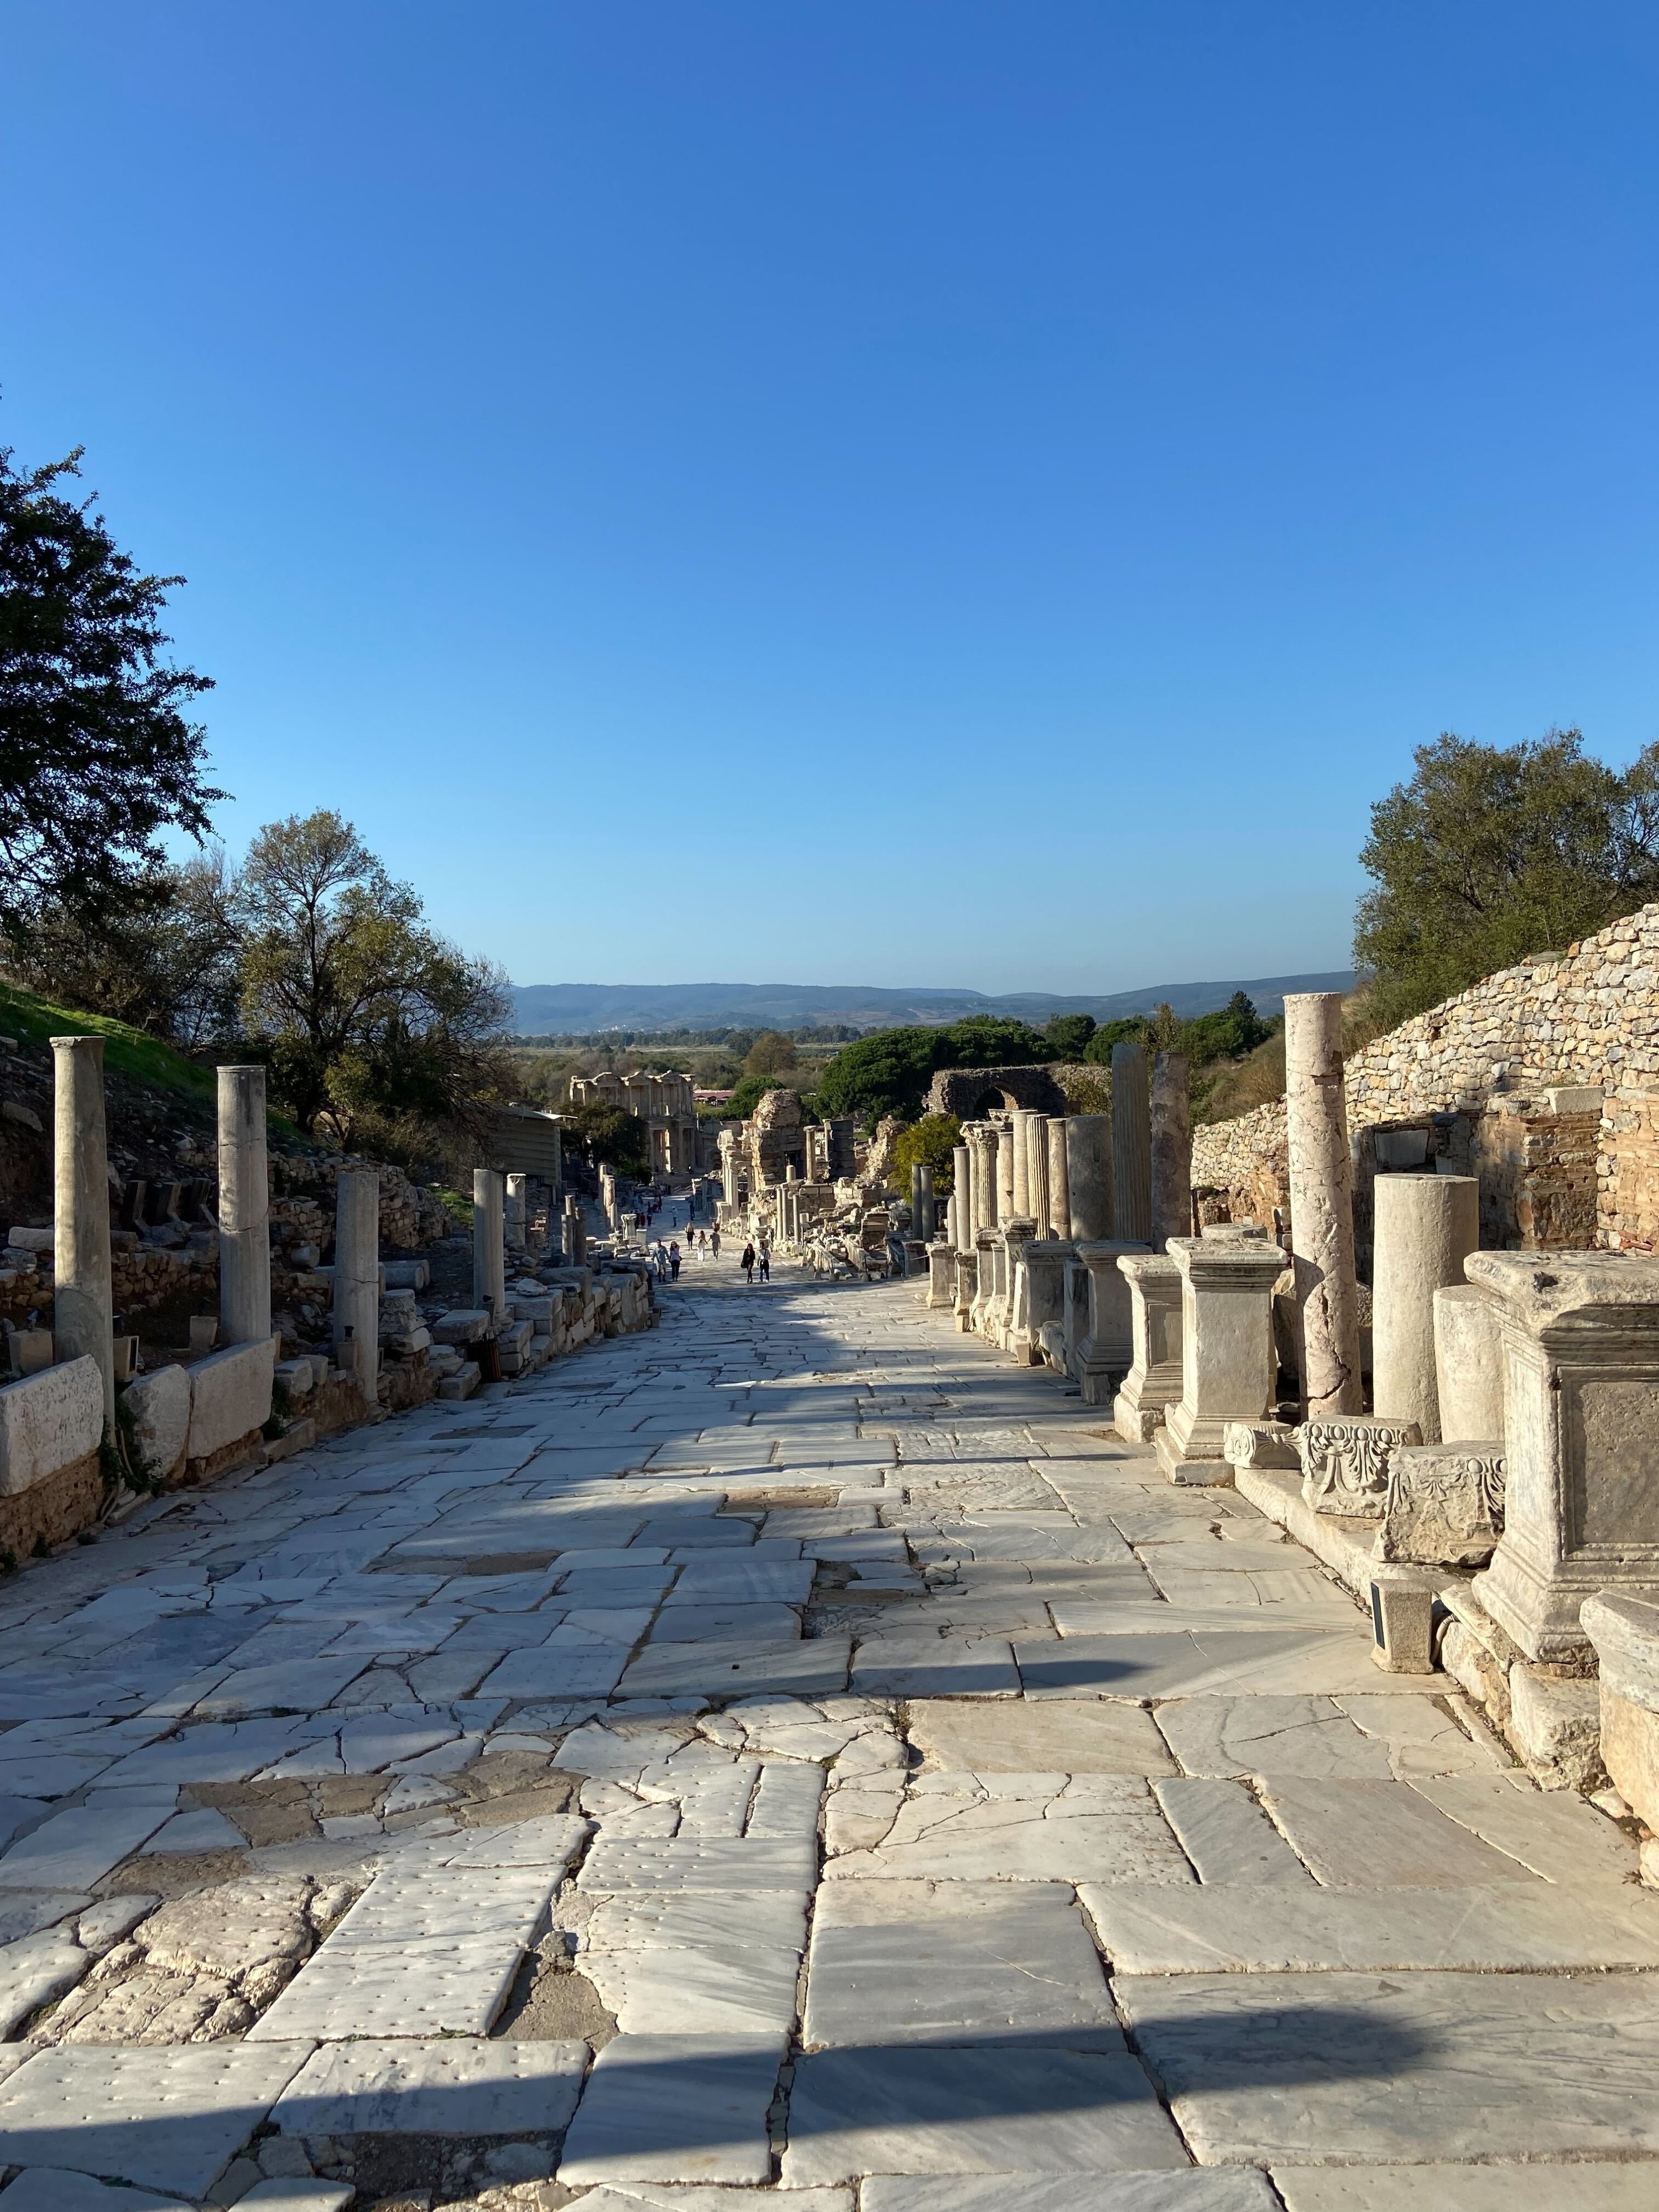 The ancient city of Ephesus, Izmir, Turkey.  (Asene Asanova for Daily Sabah)